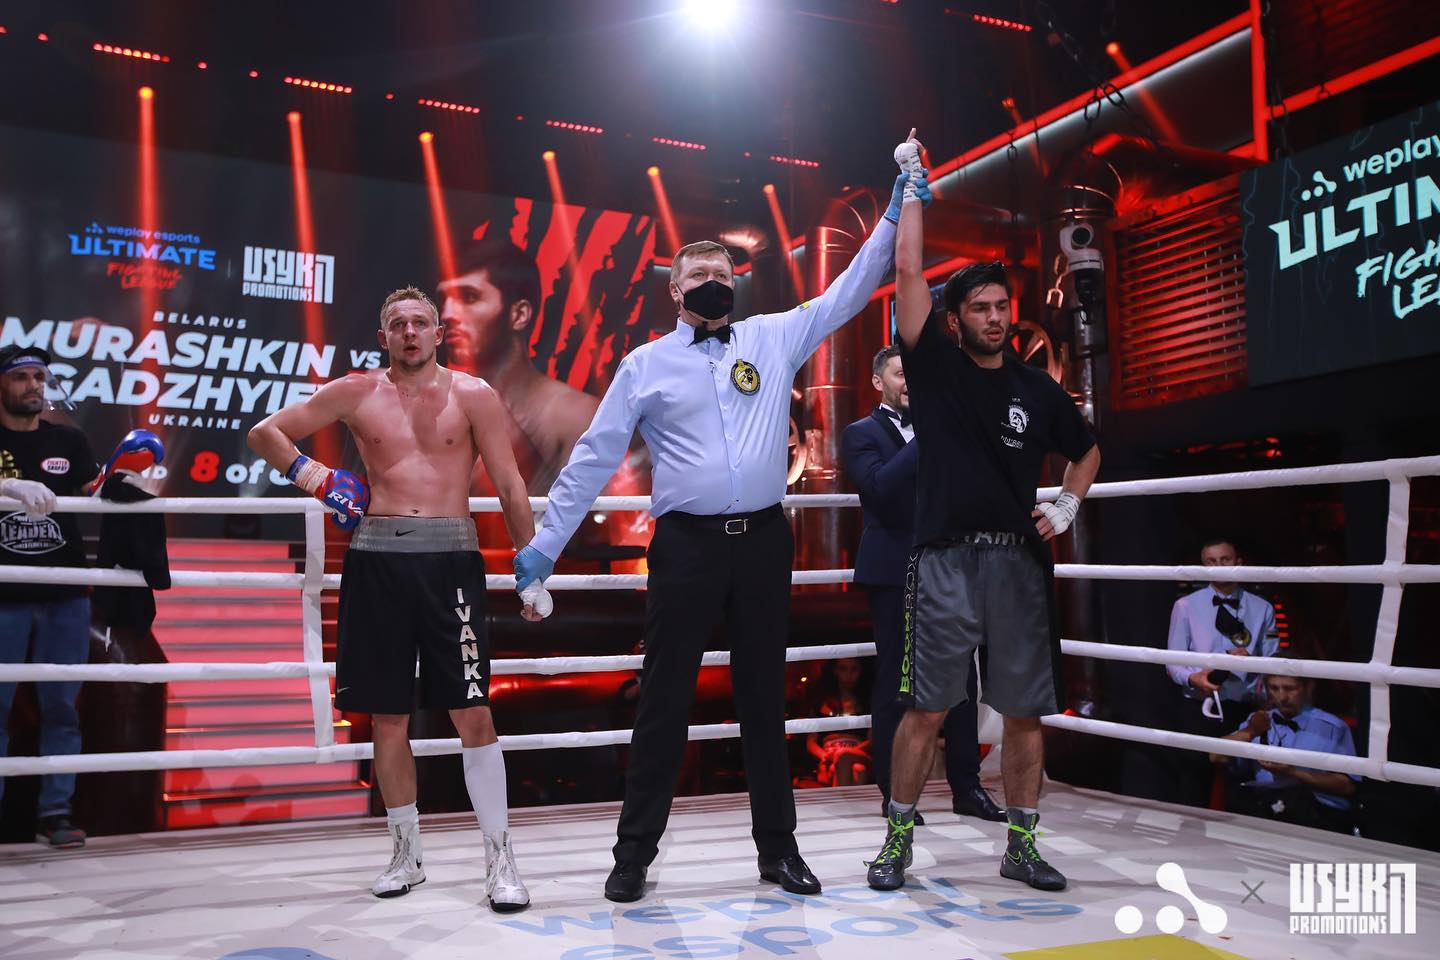 Ramil Gadzhyiev vs Ivan Murashkin